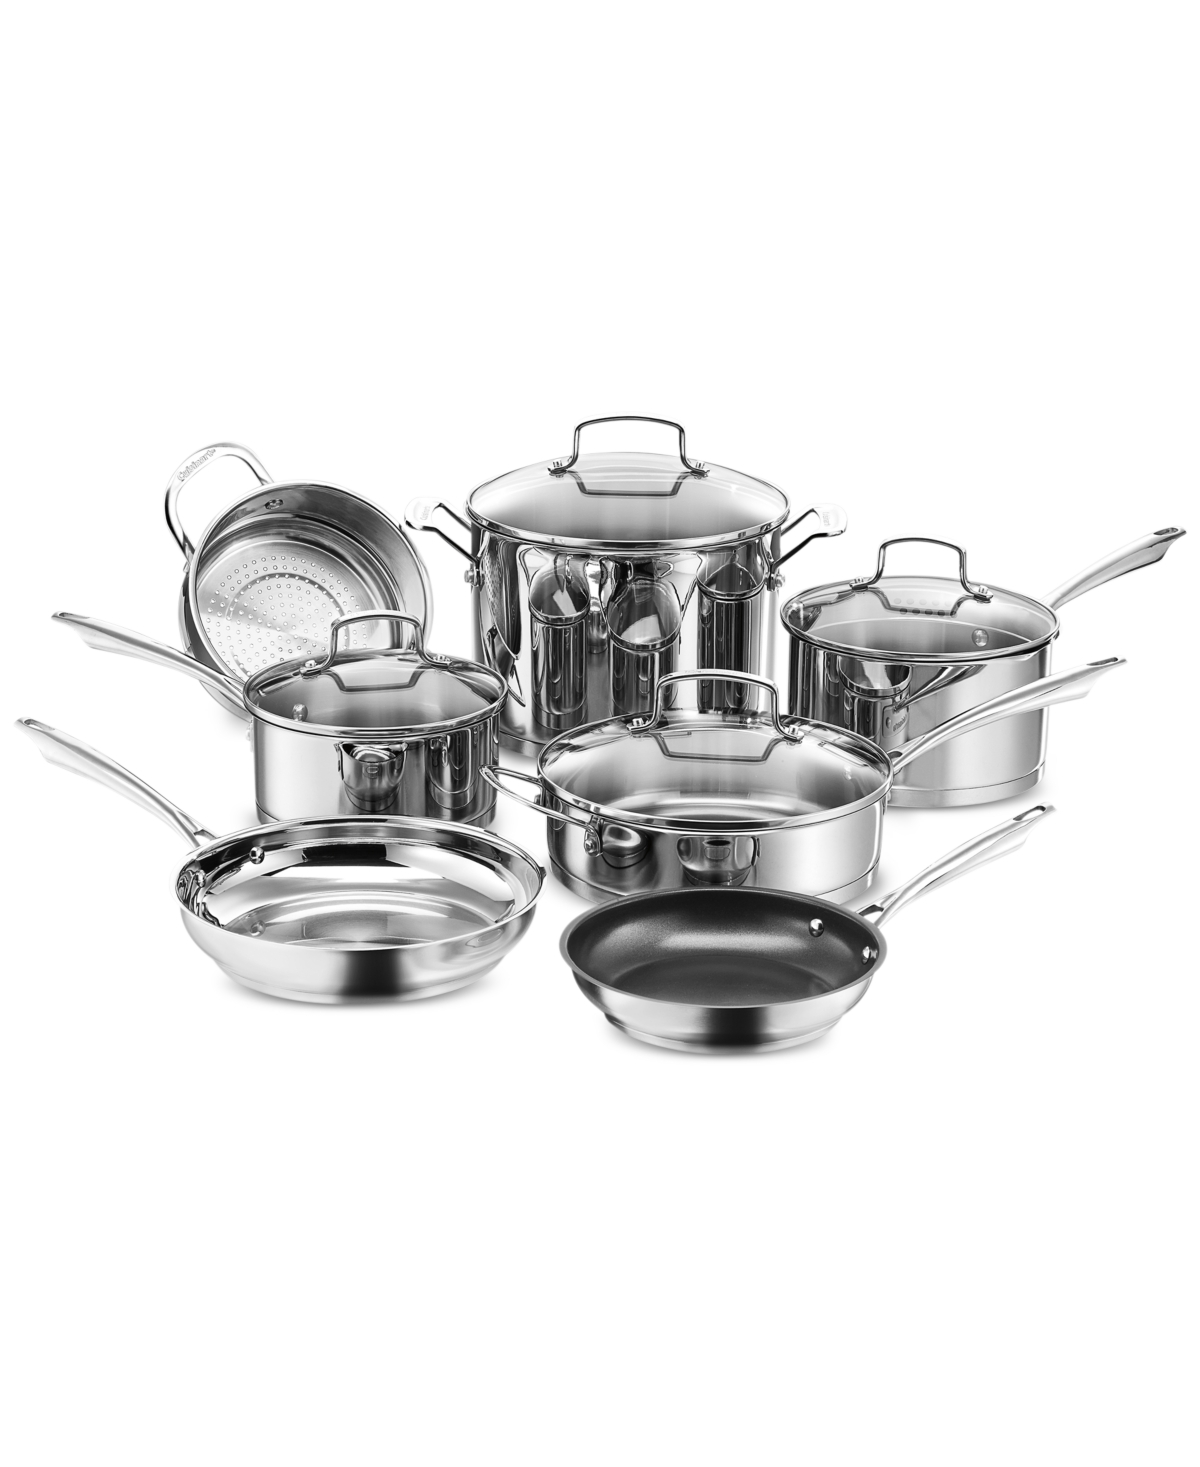 Shop Cuisinart Pro Series Stainless Steel 11-pc. Cookware Set